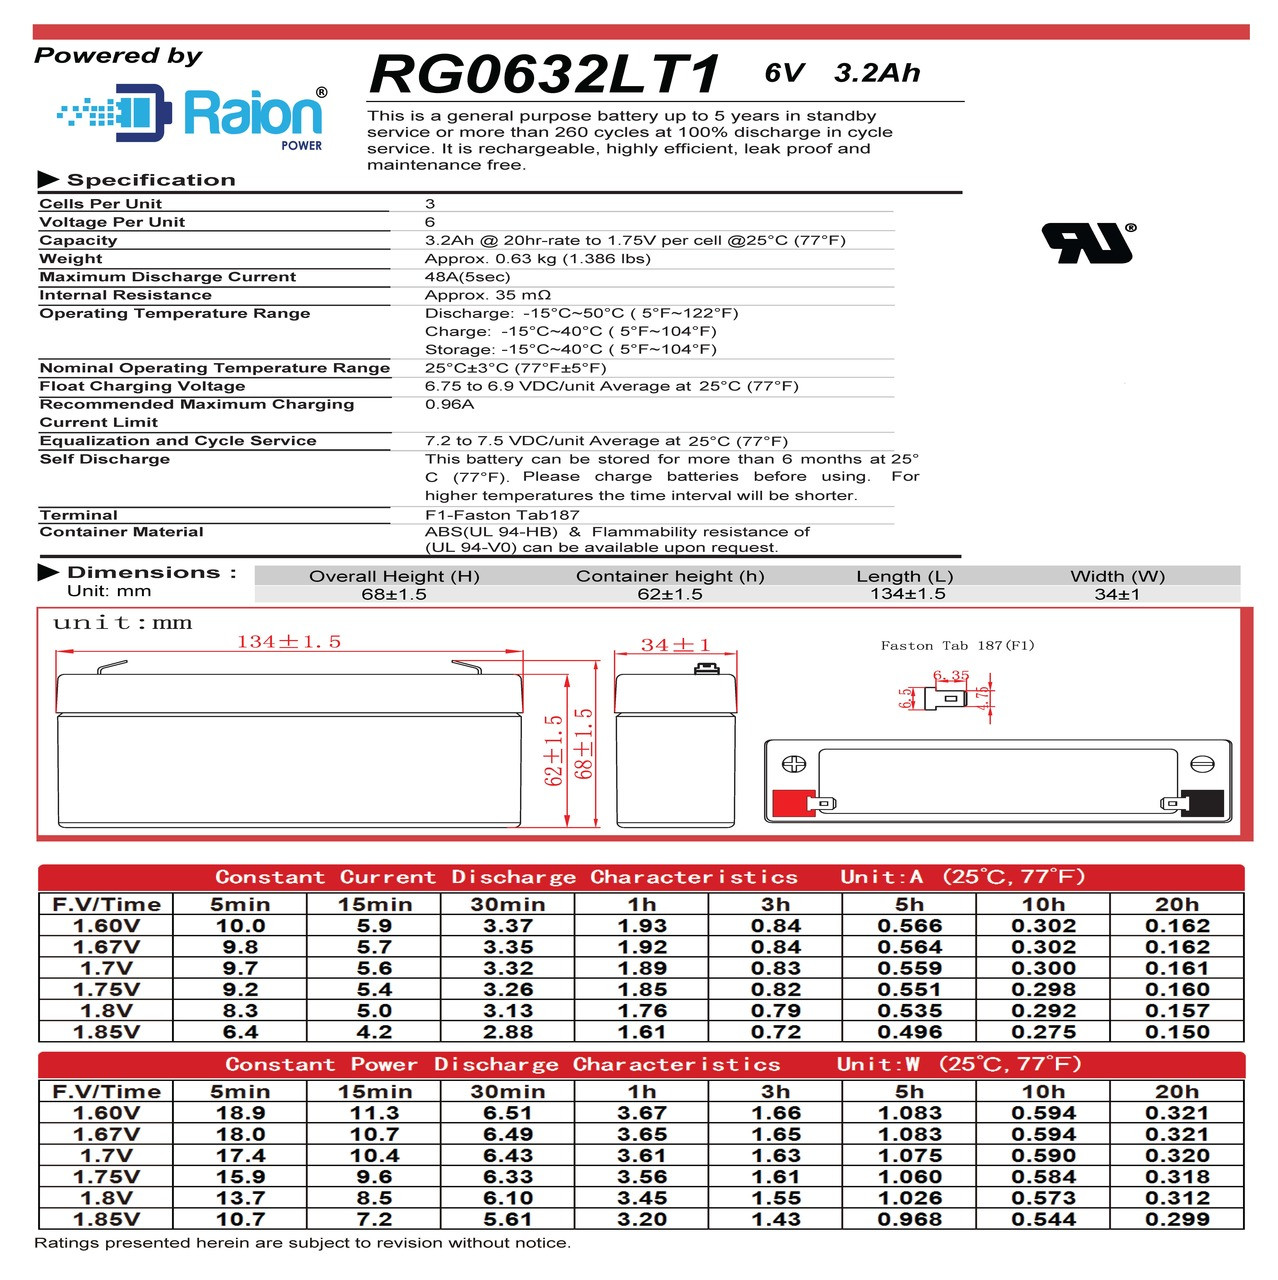 Raion Power RG0632LT1 6V 3.2Ah Battery Data Sheet for Alaris Medical 599 Infusion Pump